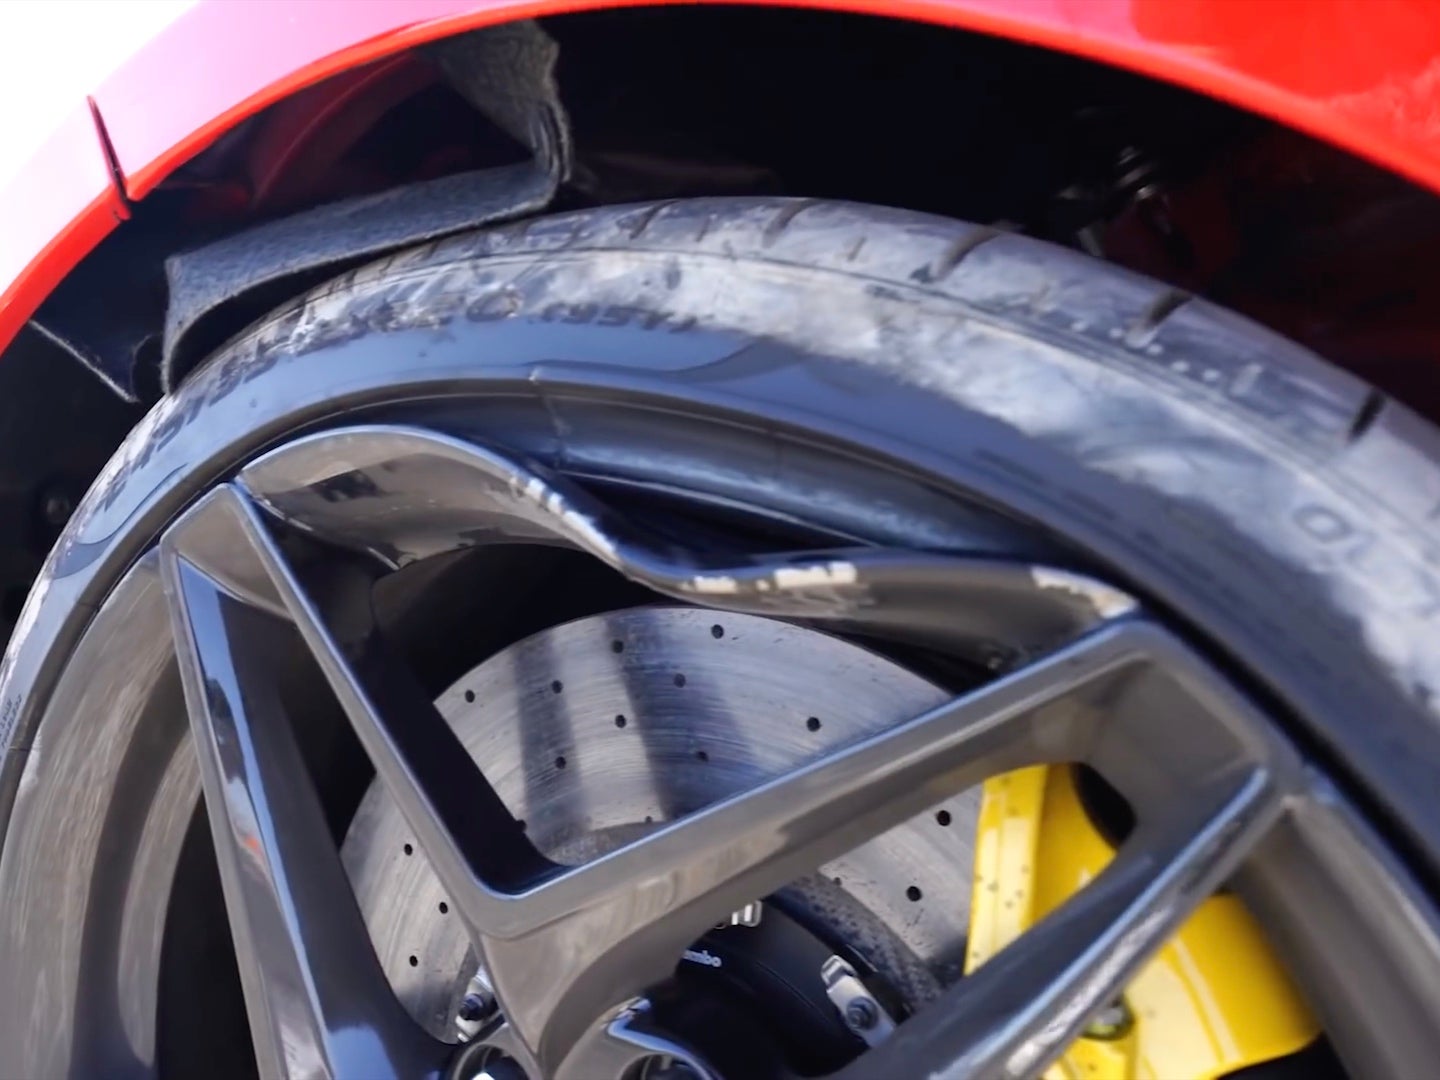 Wrecked Ferrari F8 Tributo rental supercar, <i>YouTube | Royalty Exotic Cars</i>